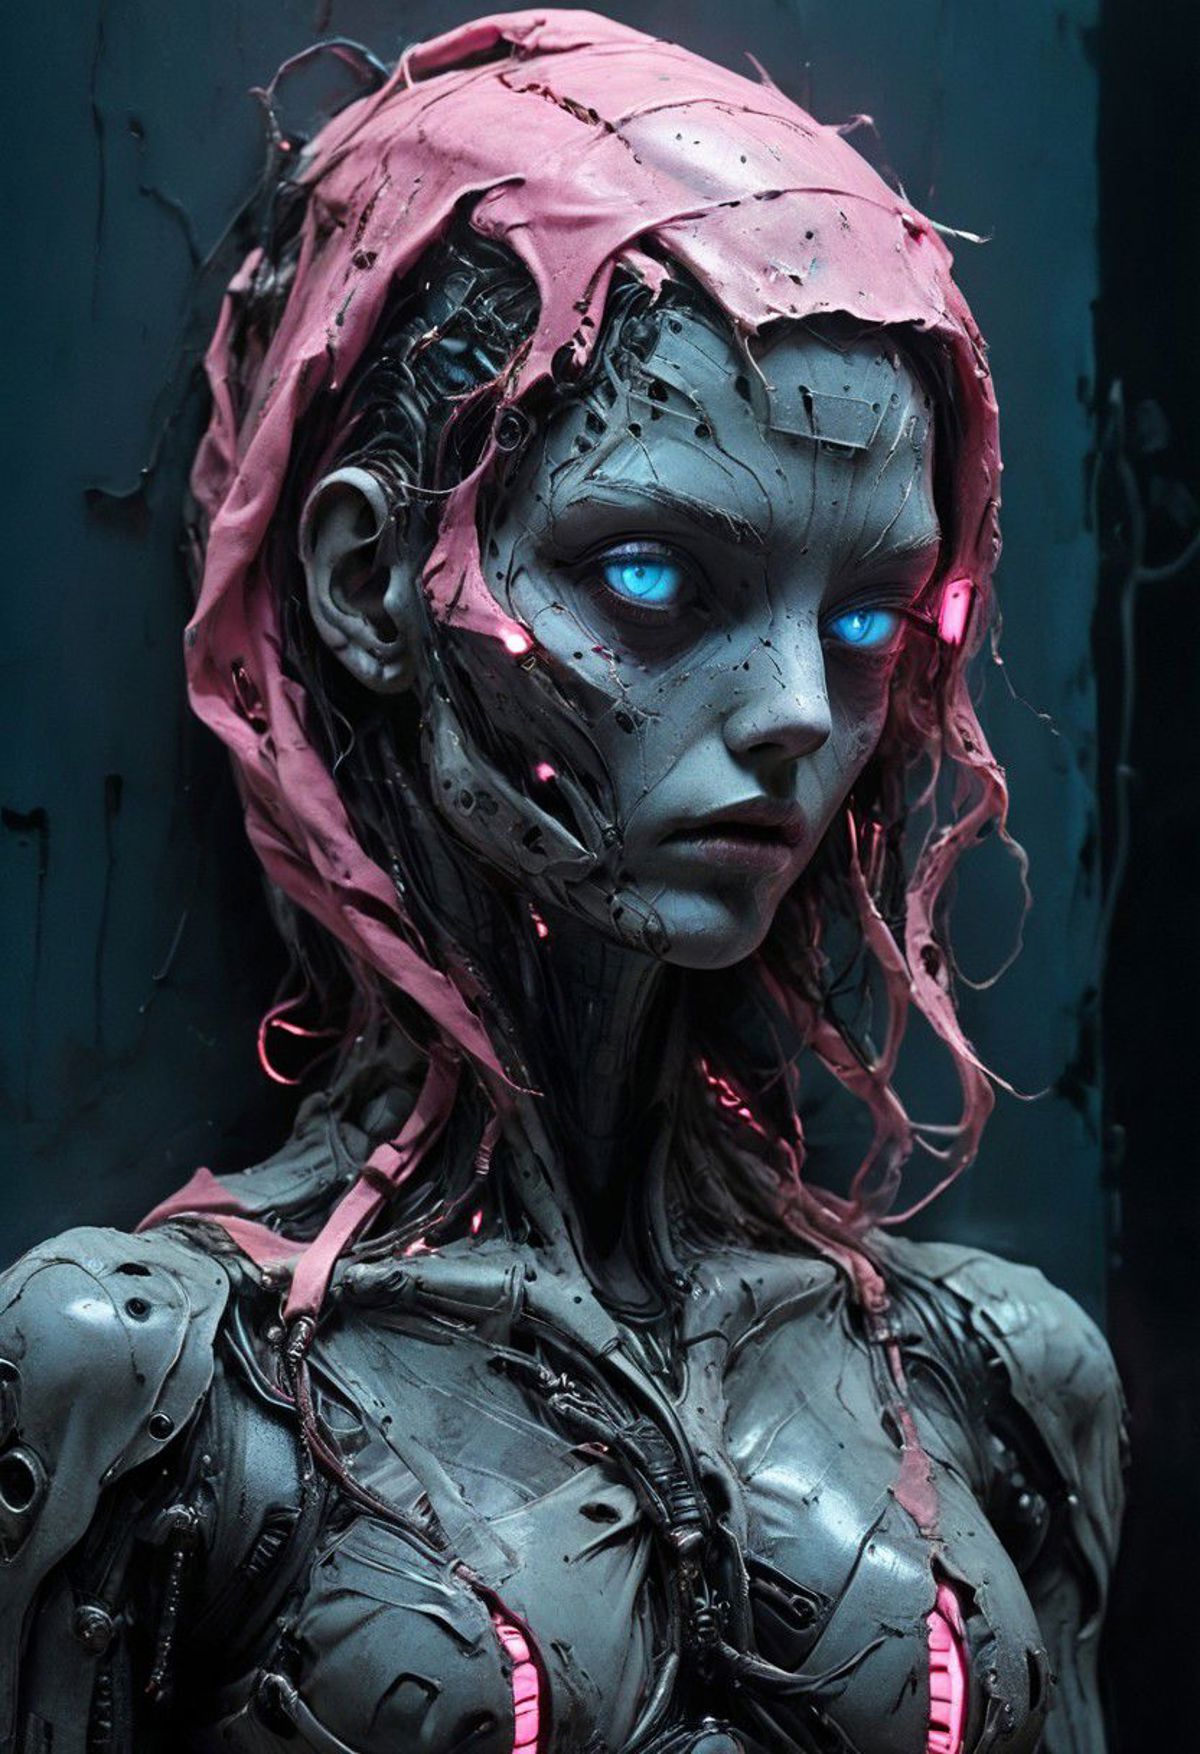 Faceless Cyborgs image by Ajuro